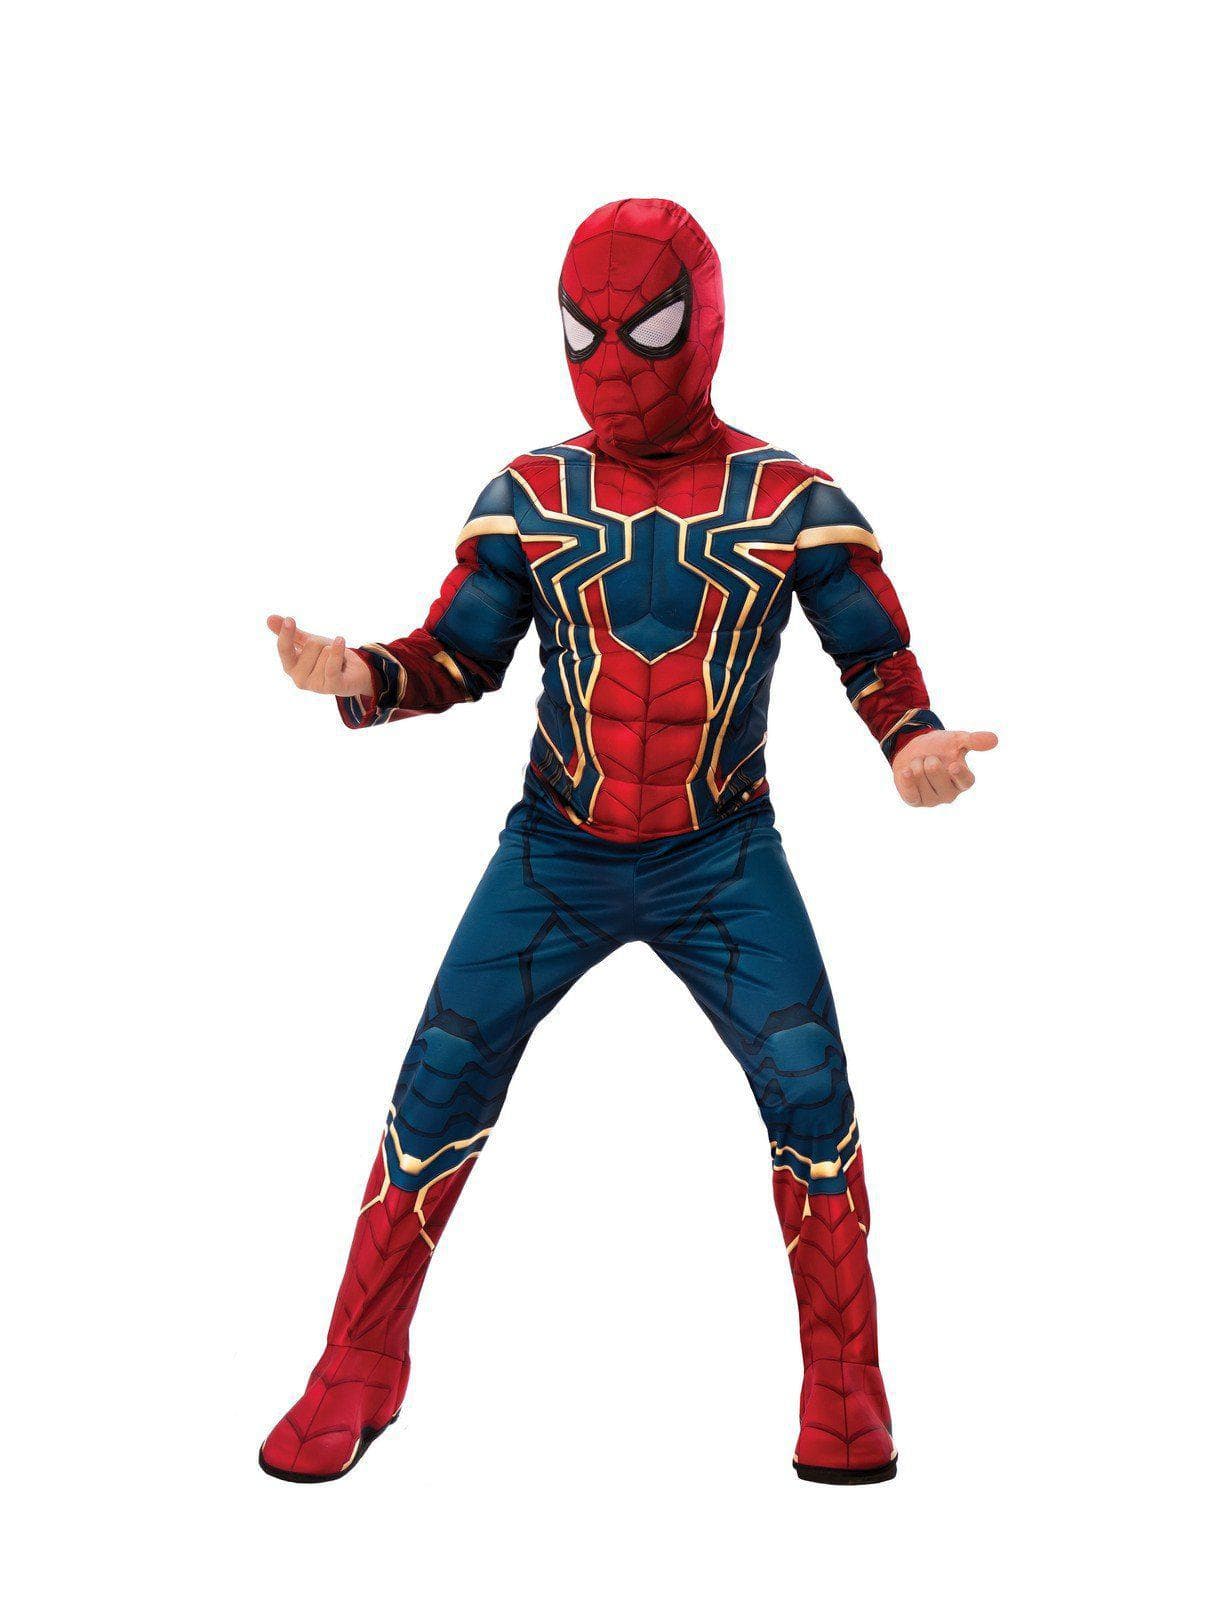 Kids Avengers Iron Spider Deluxe Costume - costumes.com